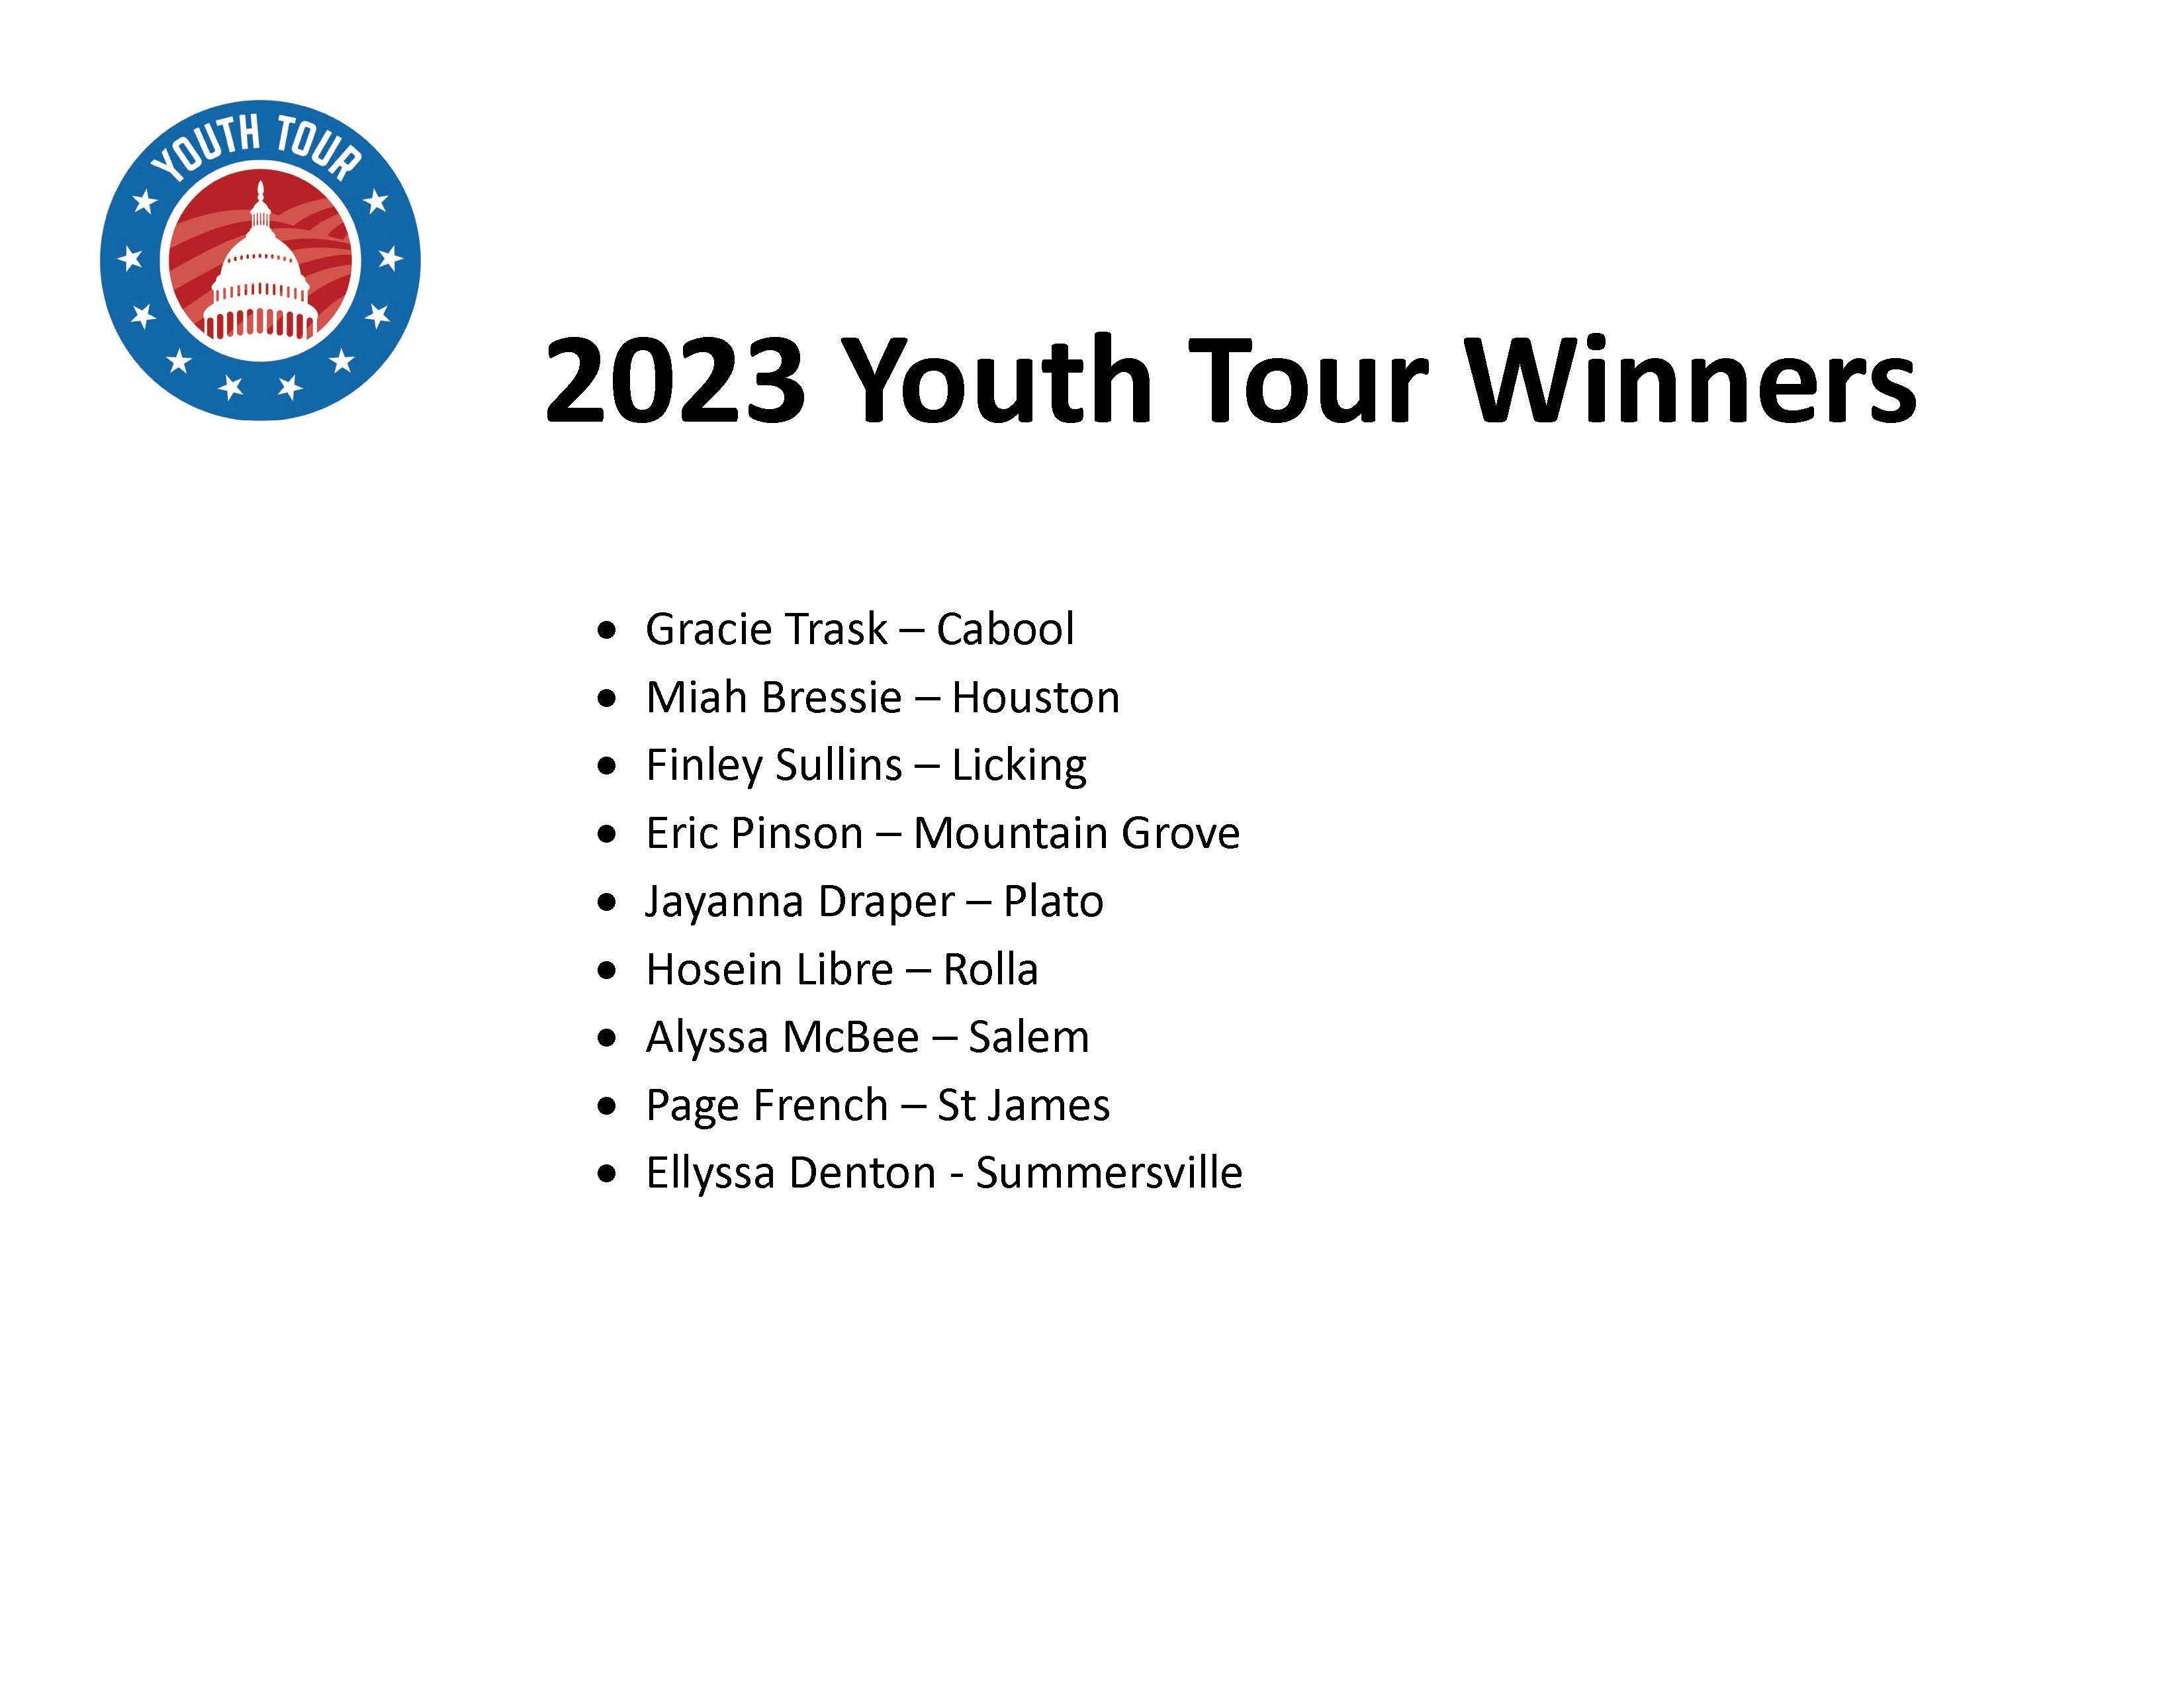 2023 Youth Tour Delegates